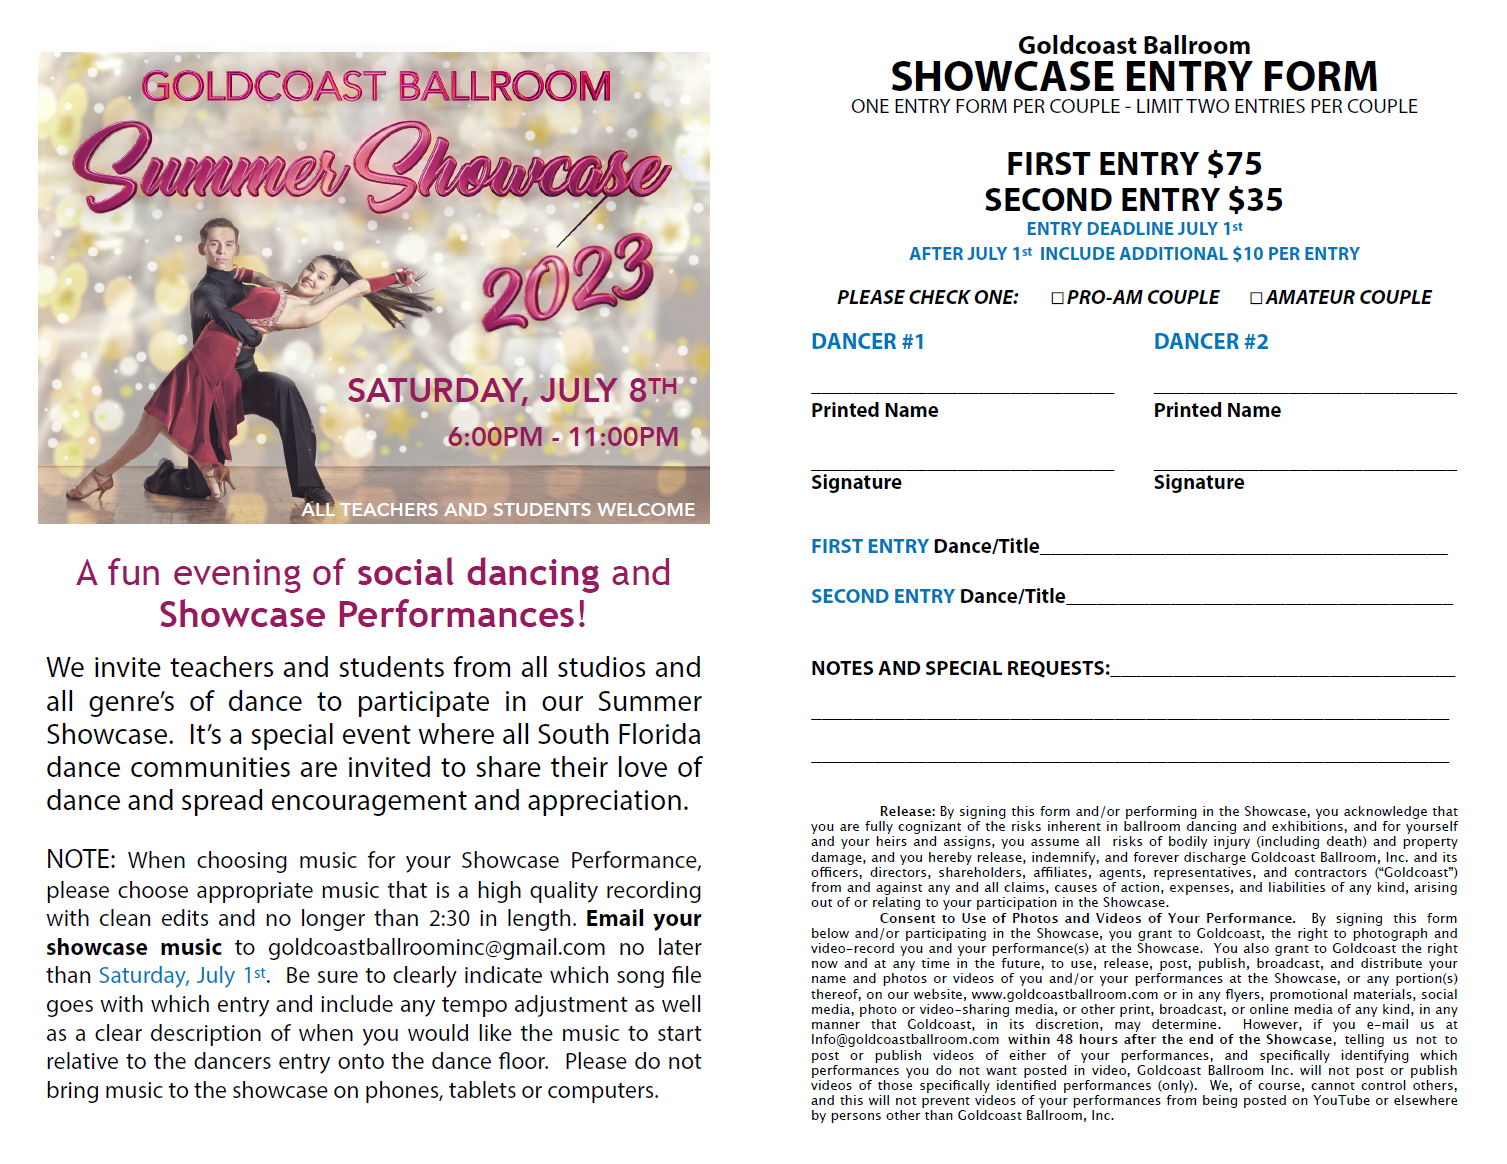 Goldcoast Ballroom Summer Showcase Entry Form - 2023